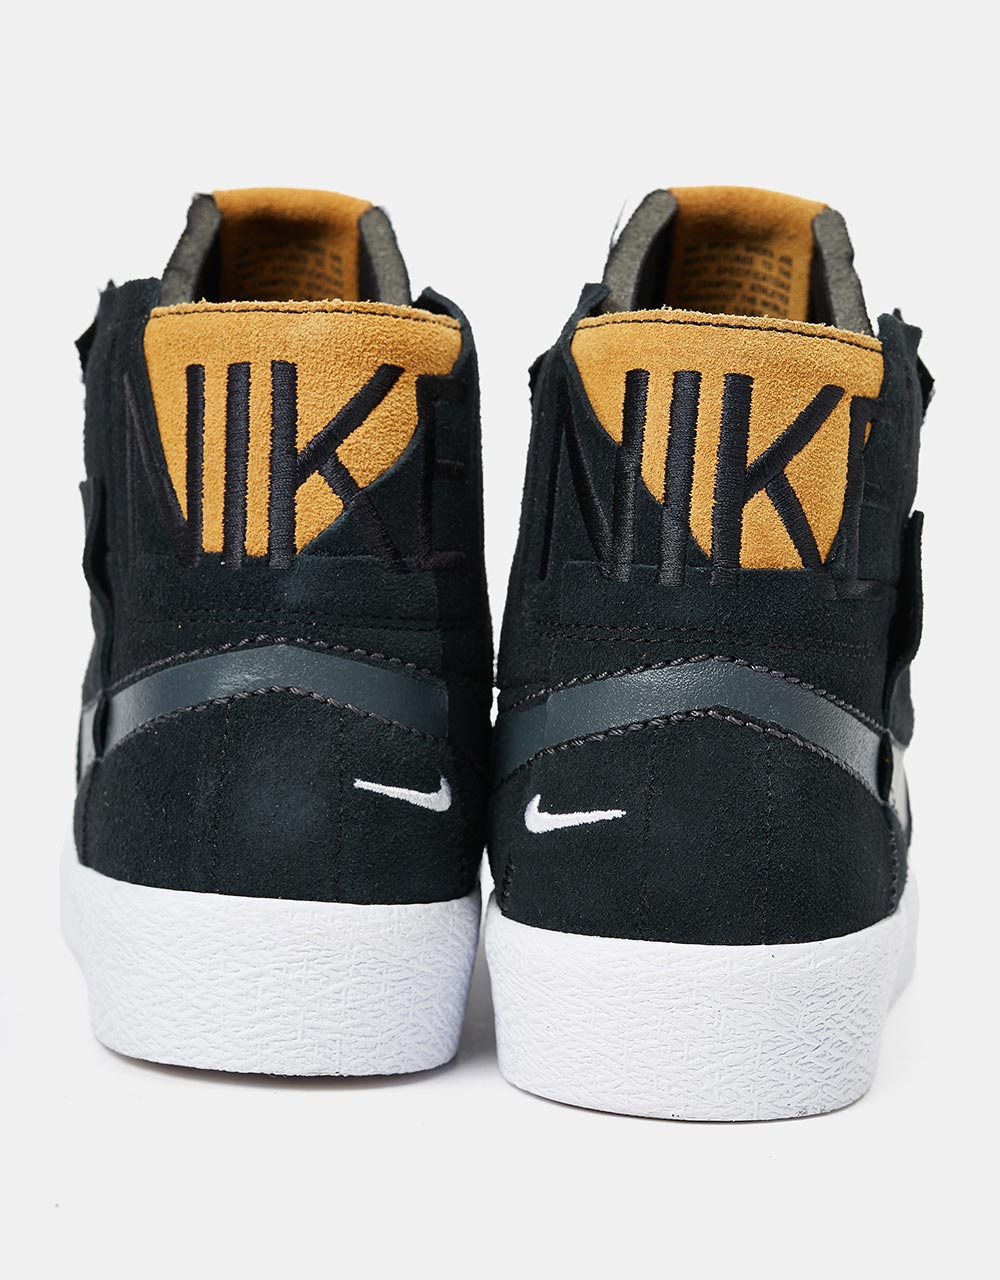 Nike SB Zoom Blazer Mid Premium Skate Shoes - Black/Anthracite-Black-White